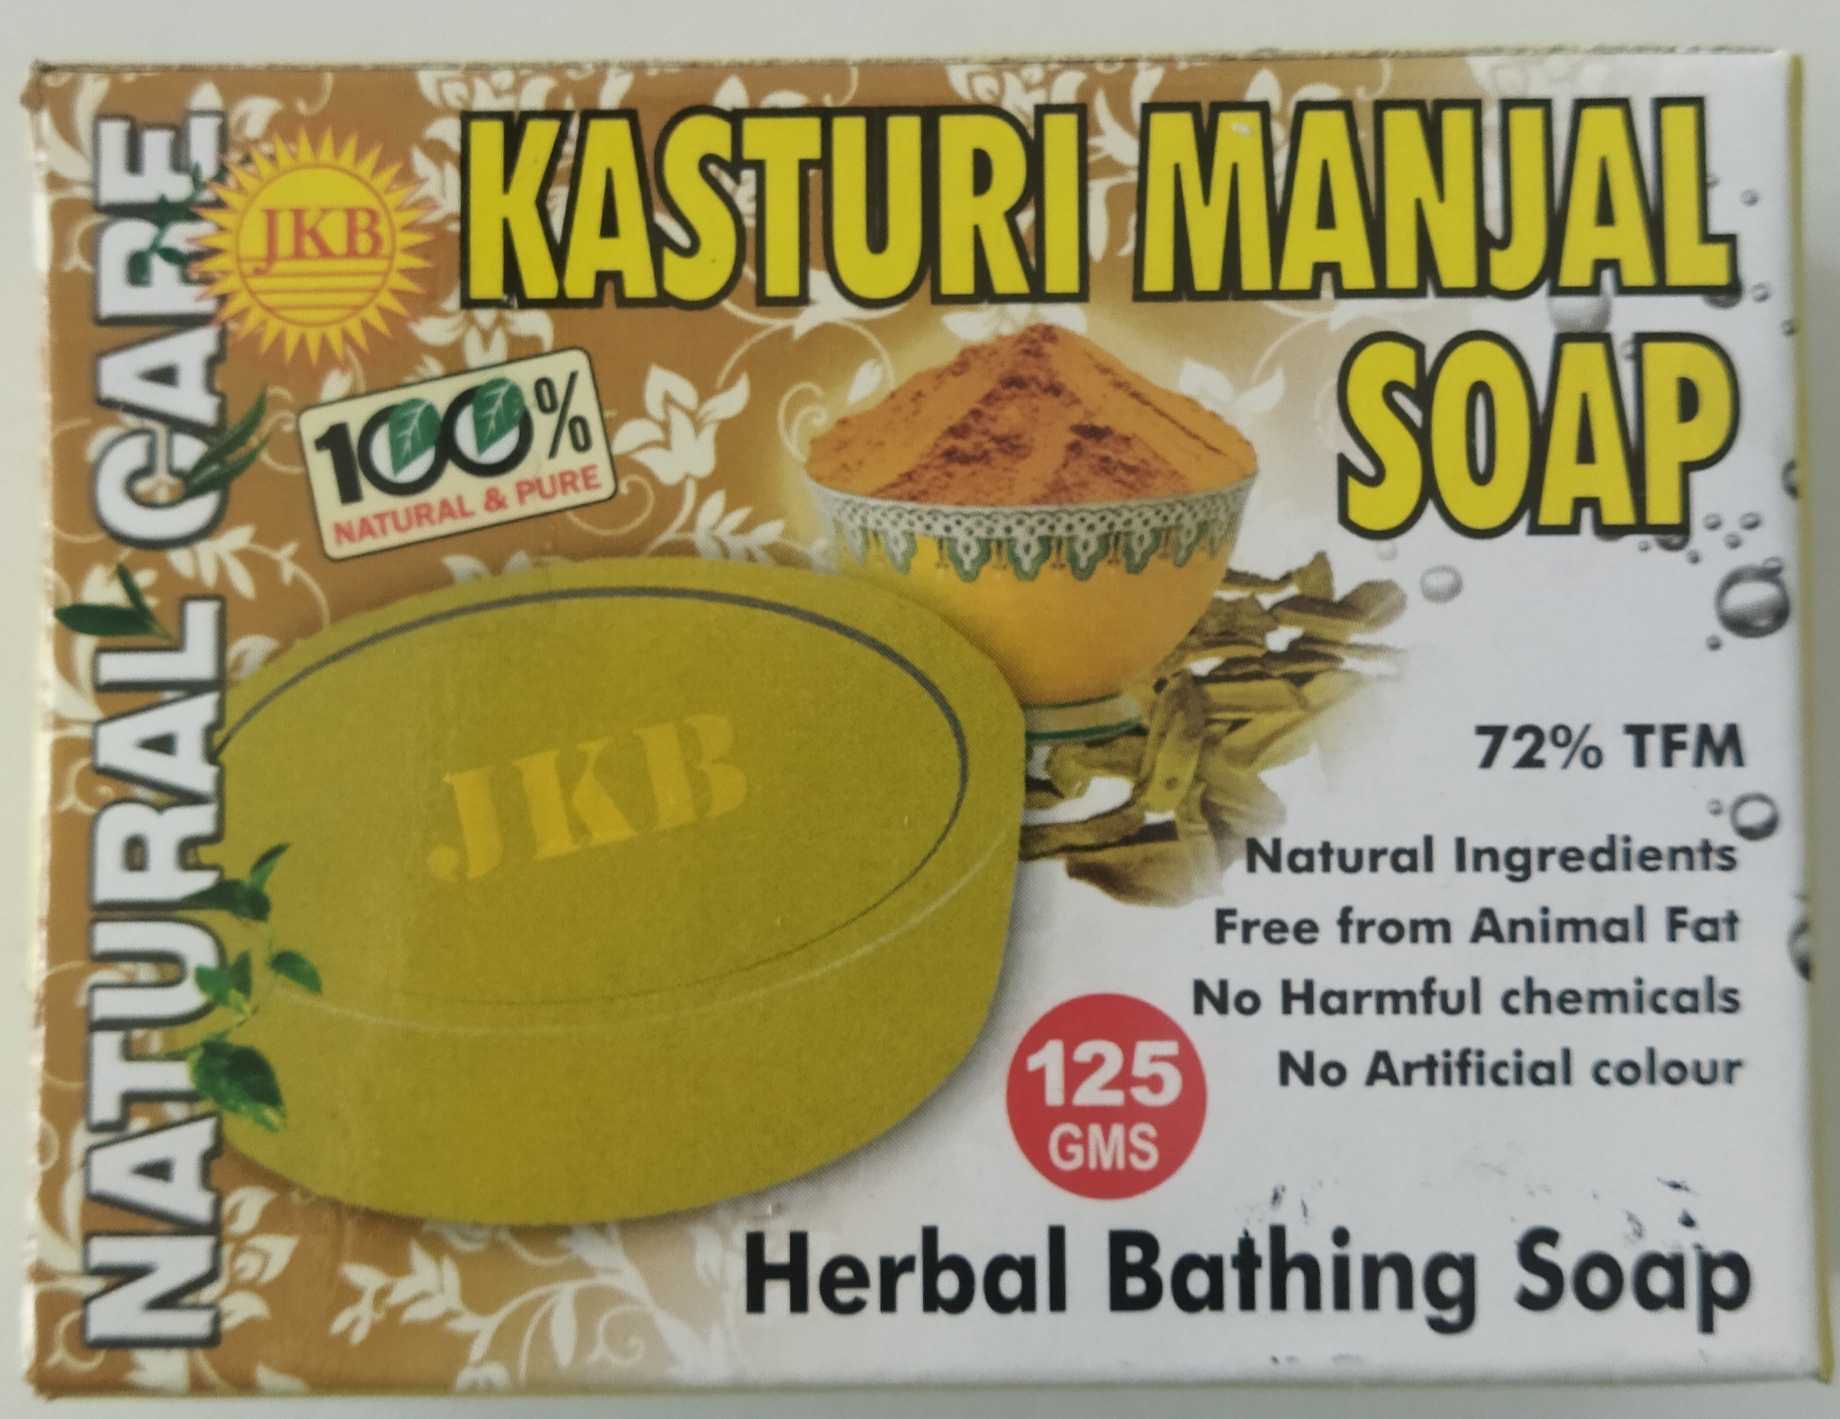 JKB Kasturi manjal soap